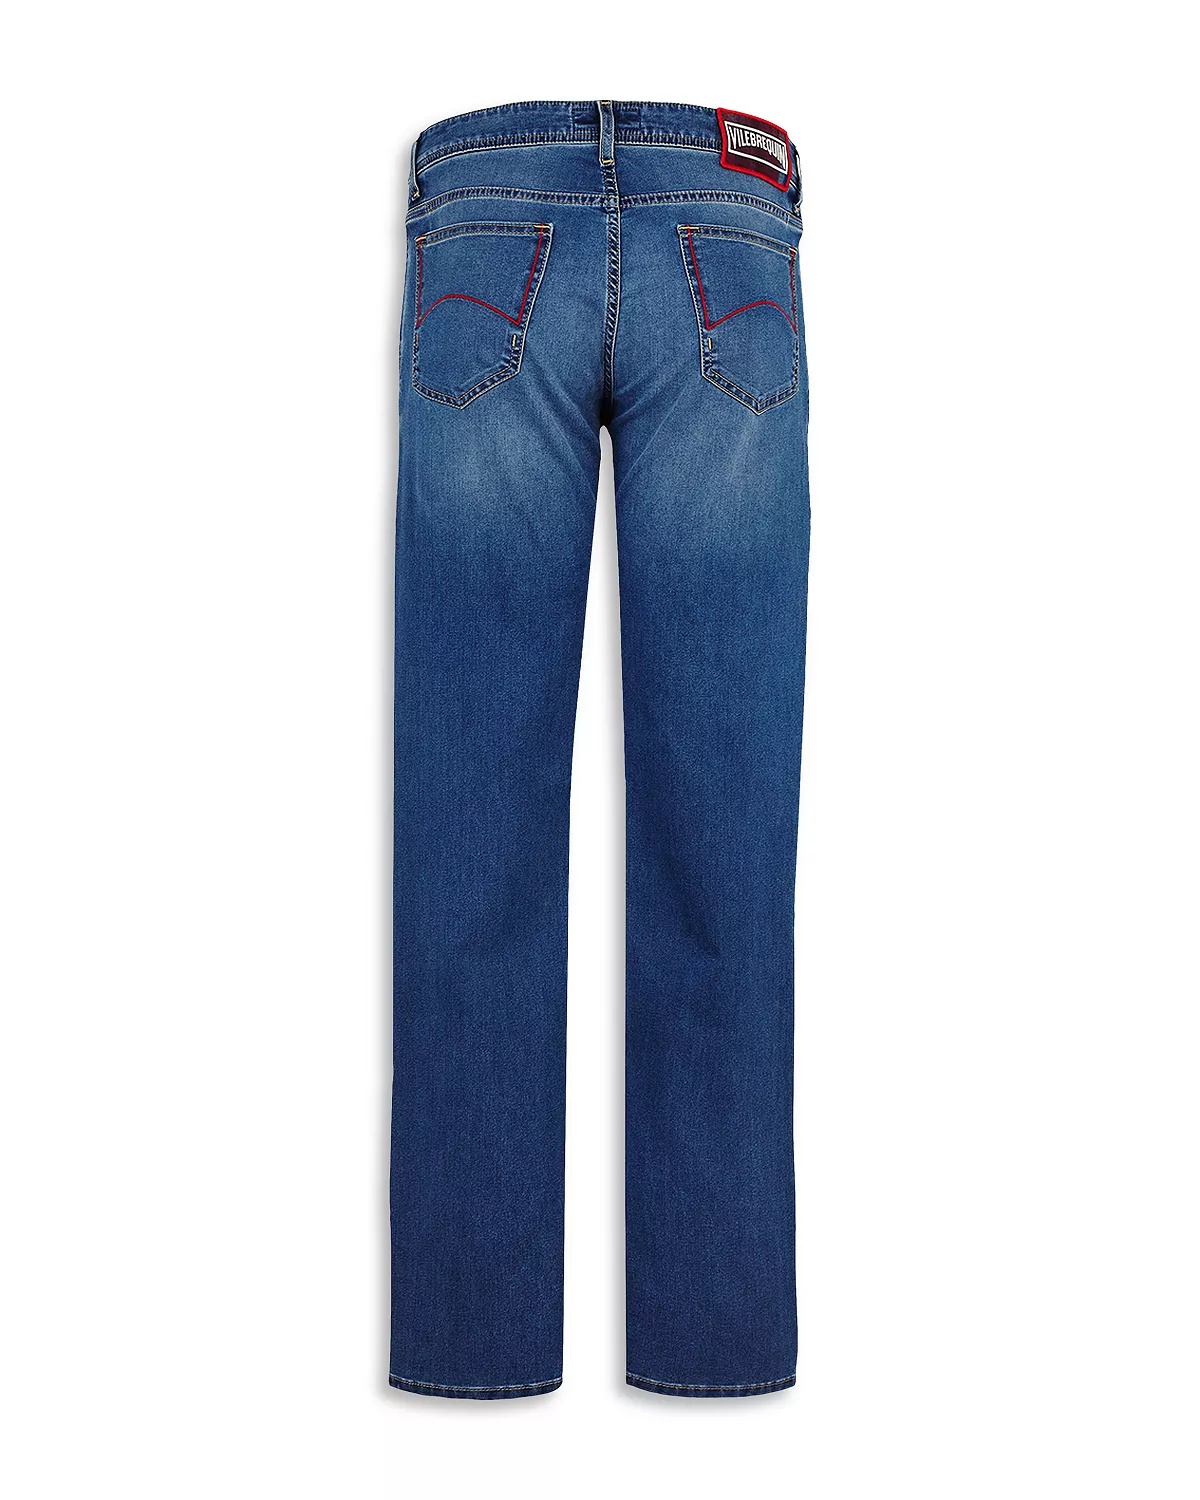 Gretta Light Denim Jeans - 2